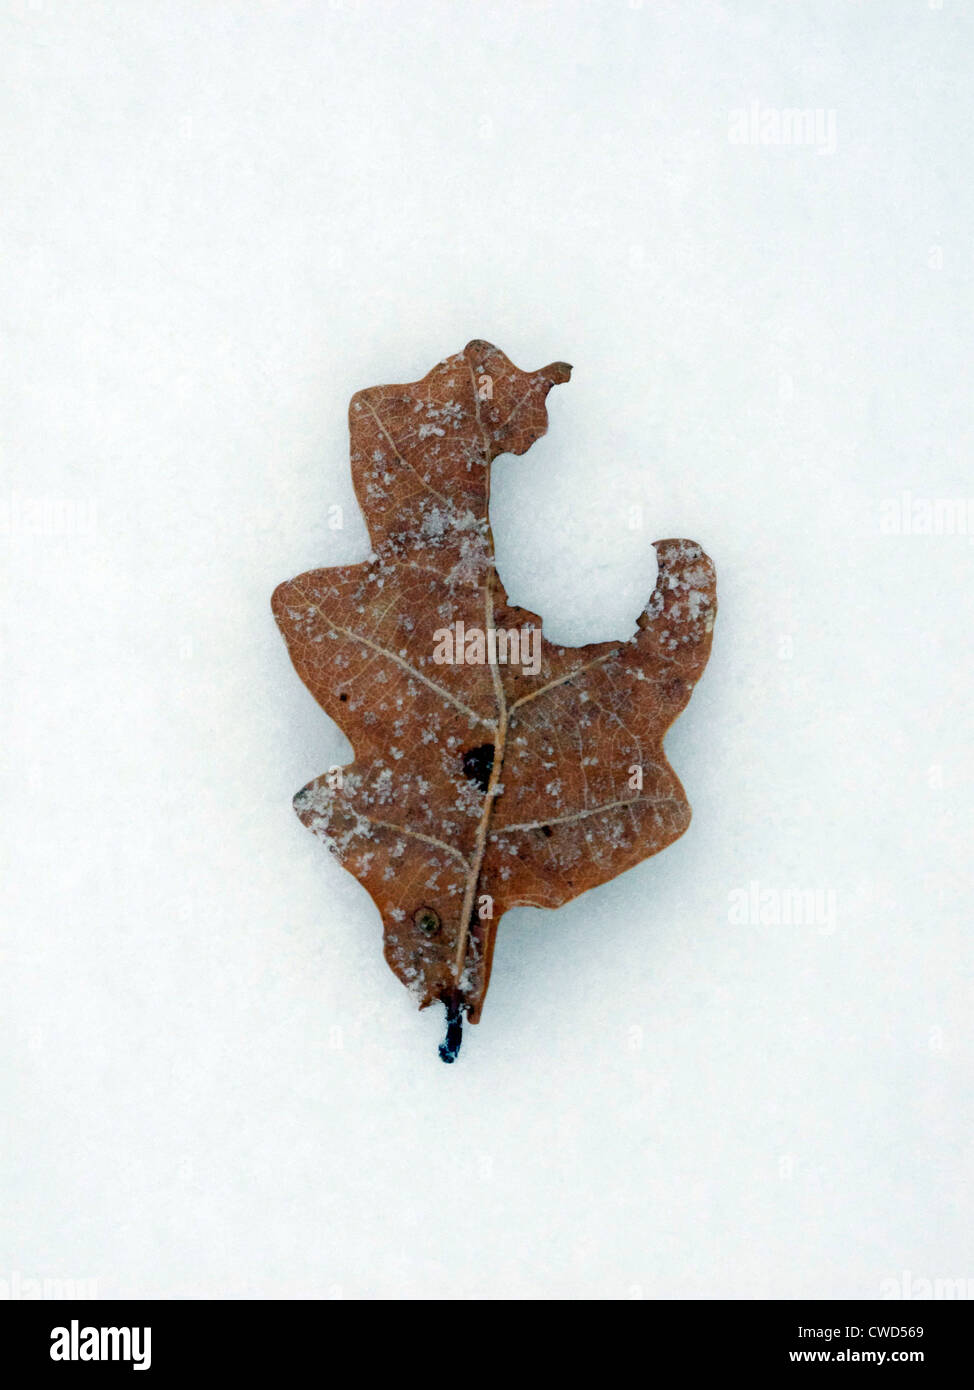 Icy leaf on snow Stock Photo